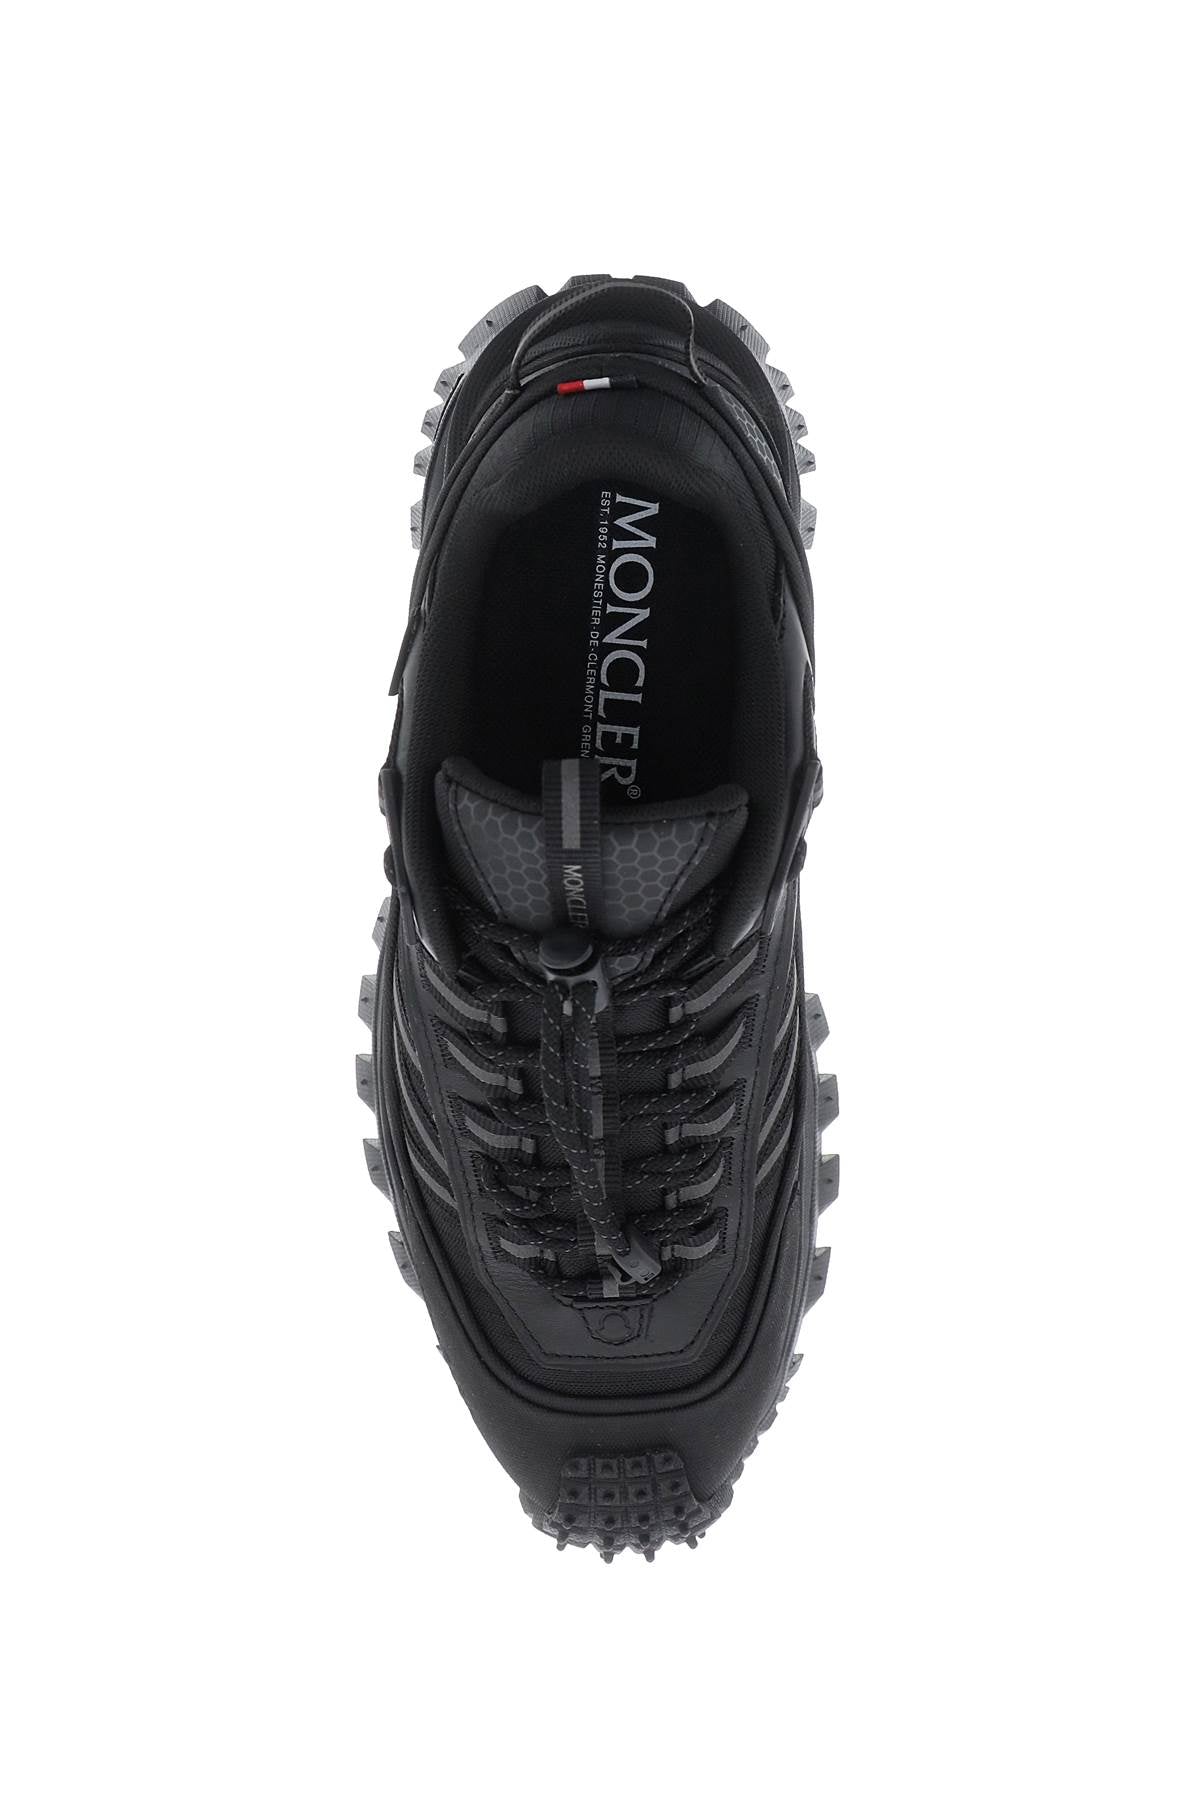 Moncler Moncler basic trailgrip gtx sneakers